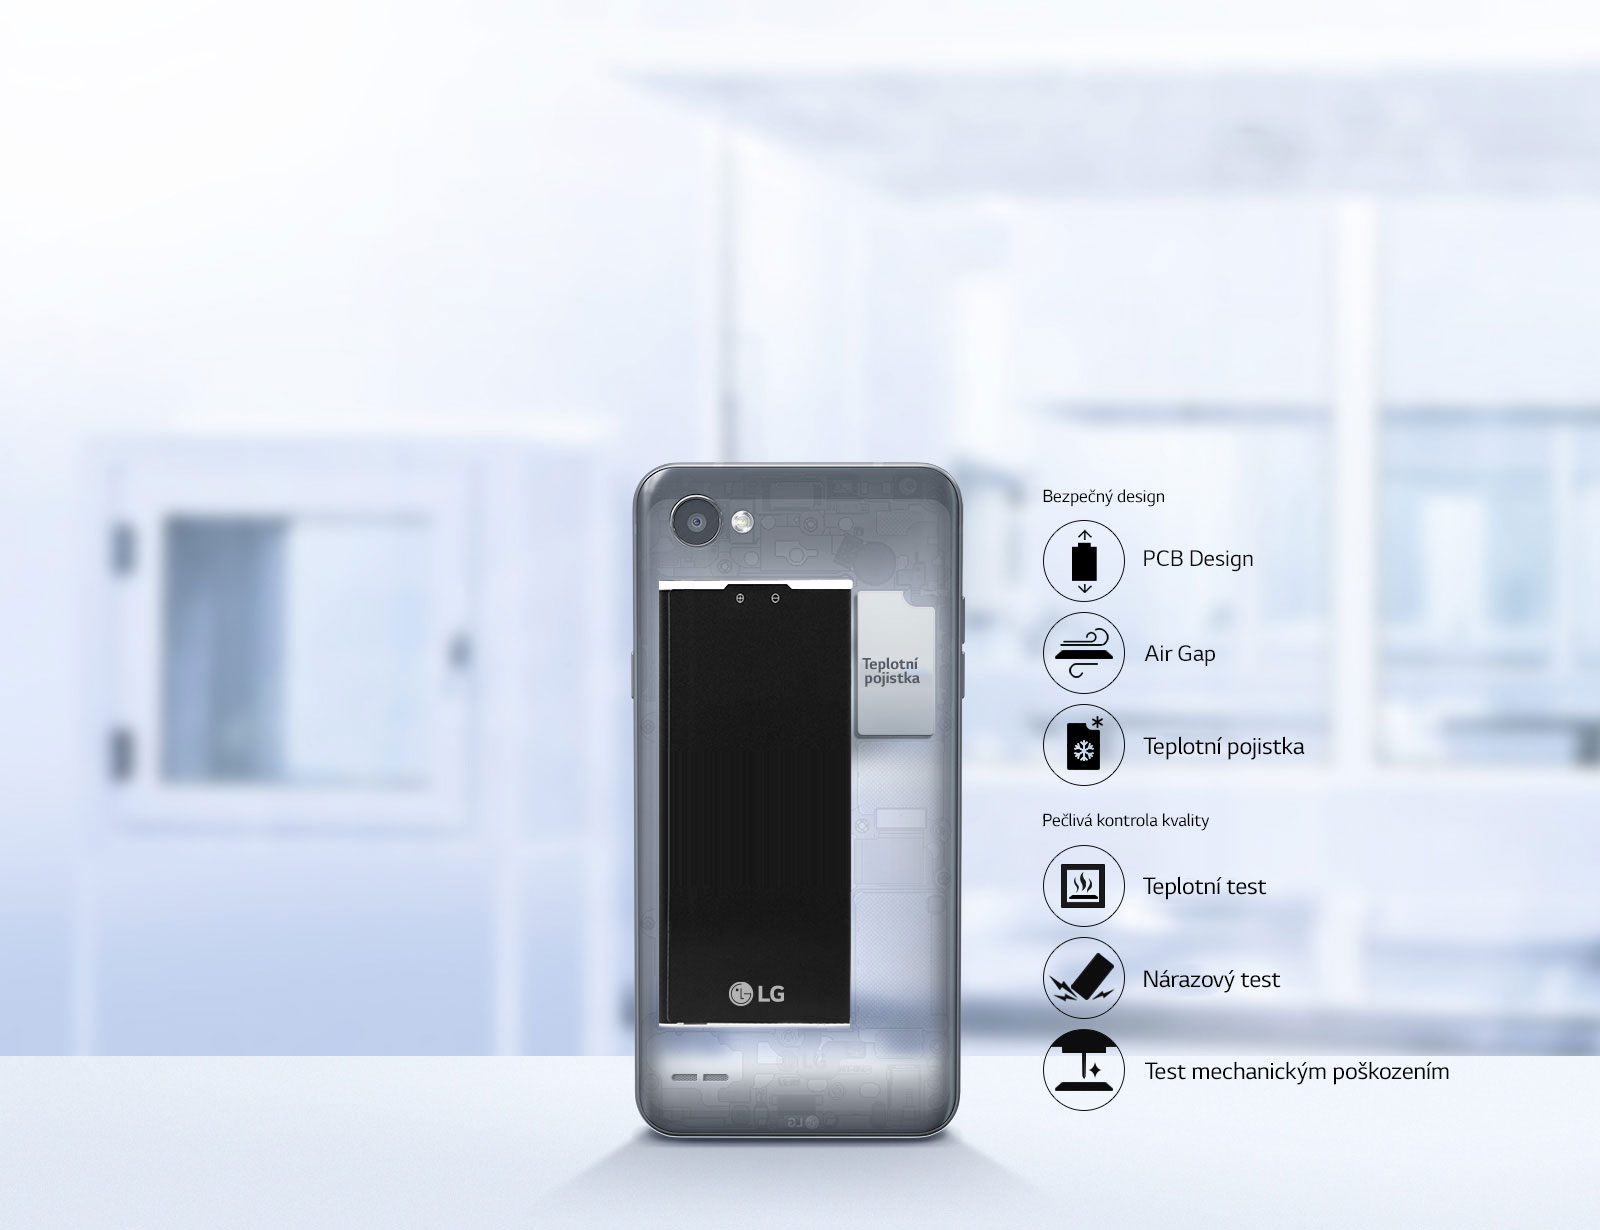 Fantastický výkon s obrovskou úsporou energie a velkou baterii, LG Q6 je maratonec, kterého si zamilujete